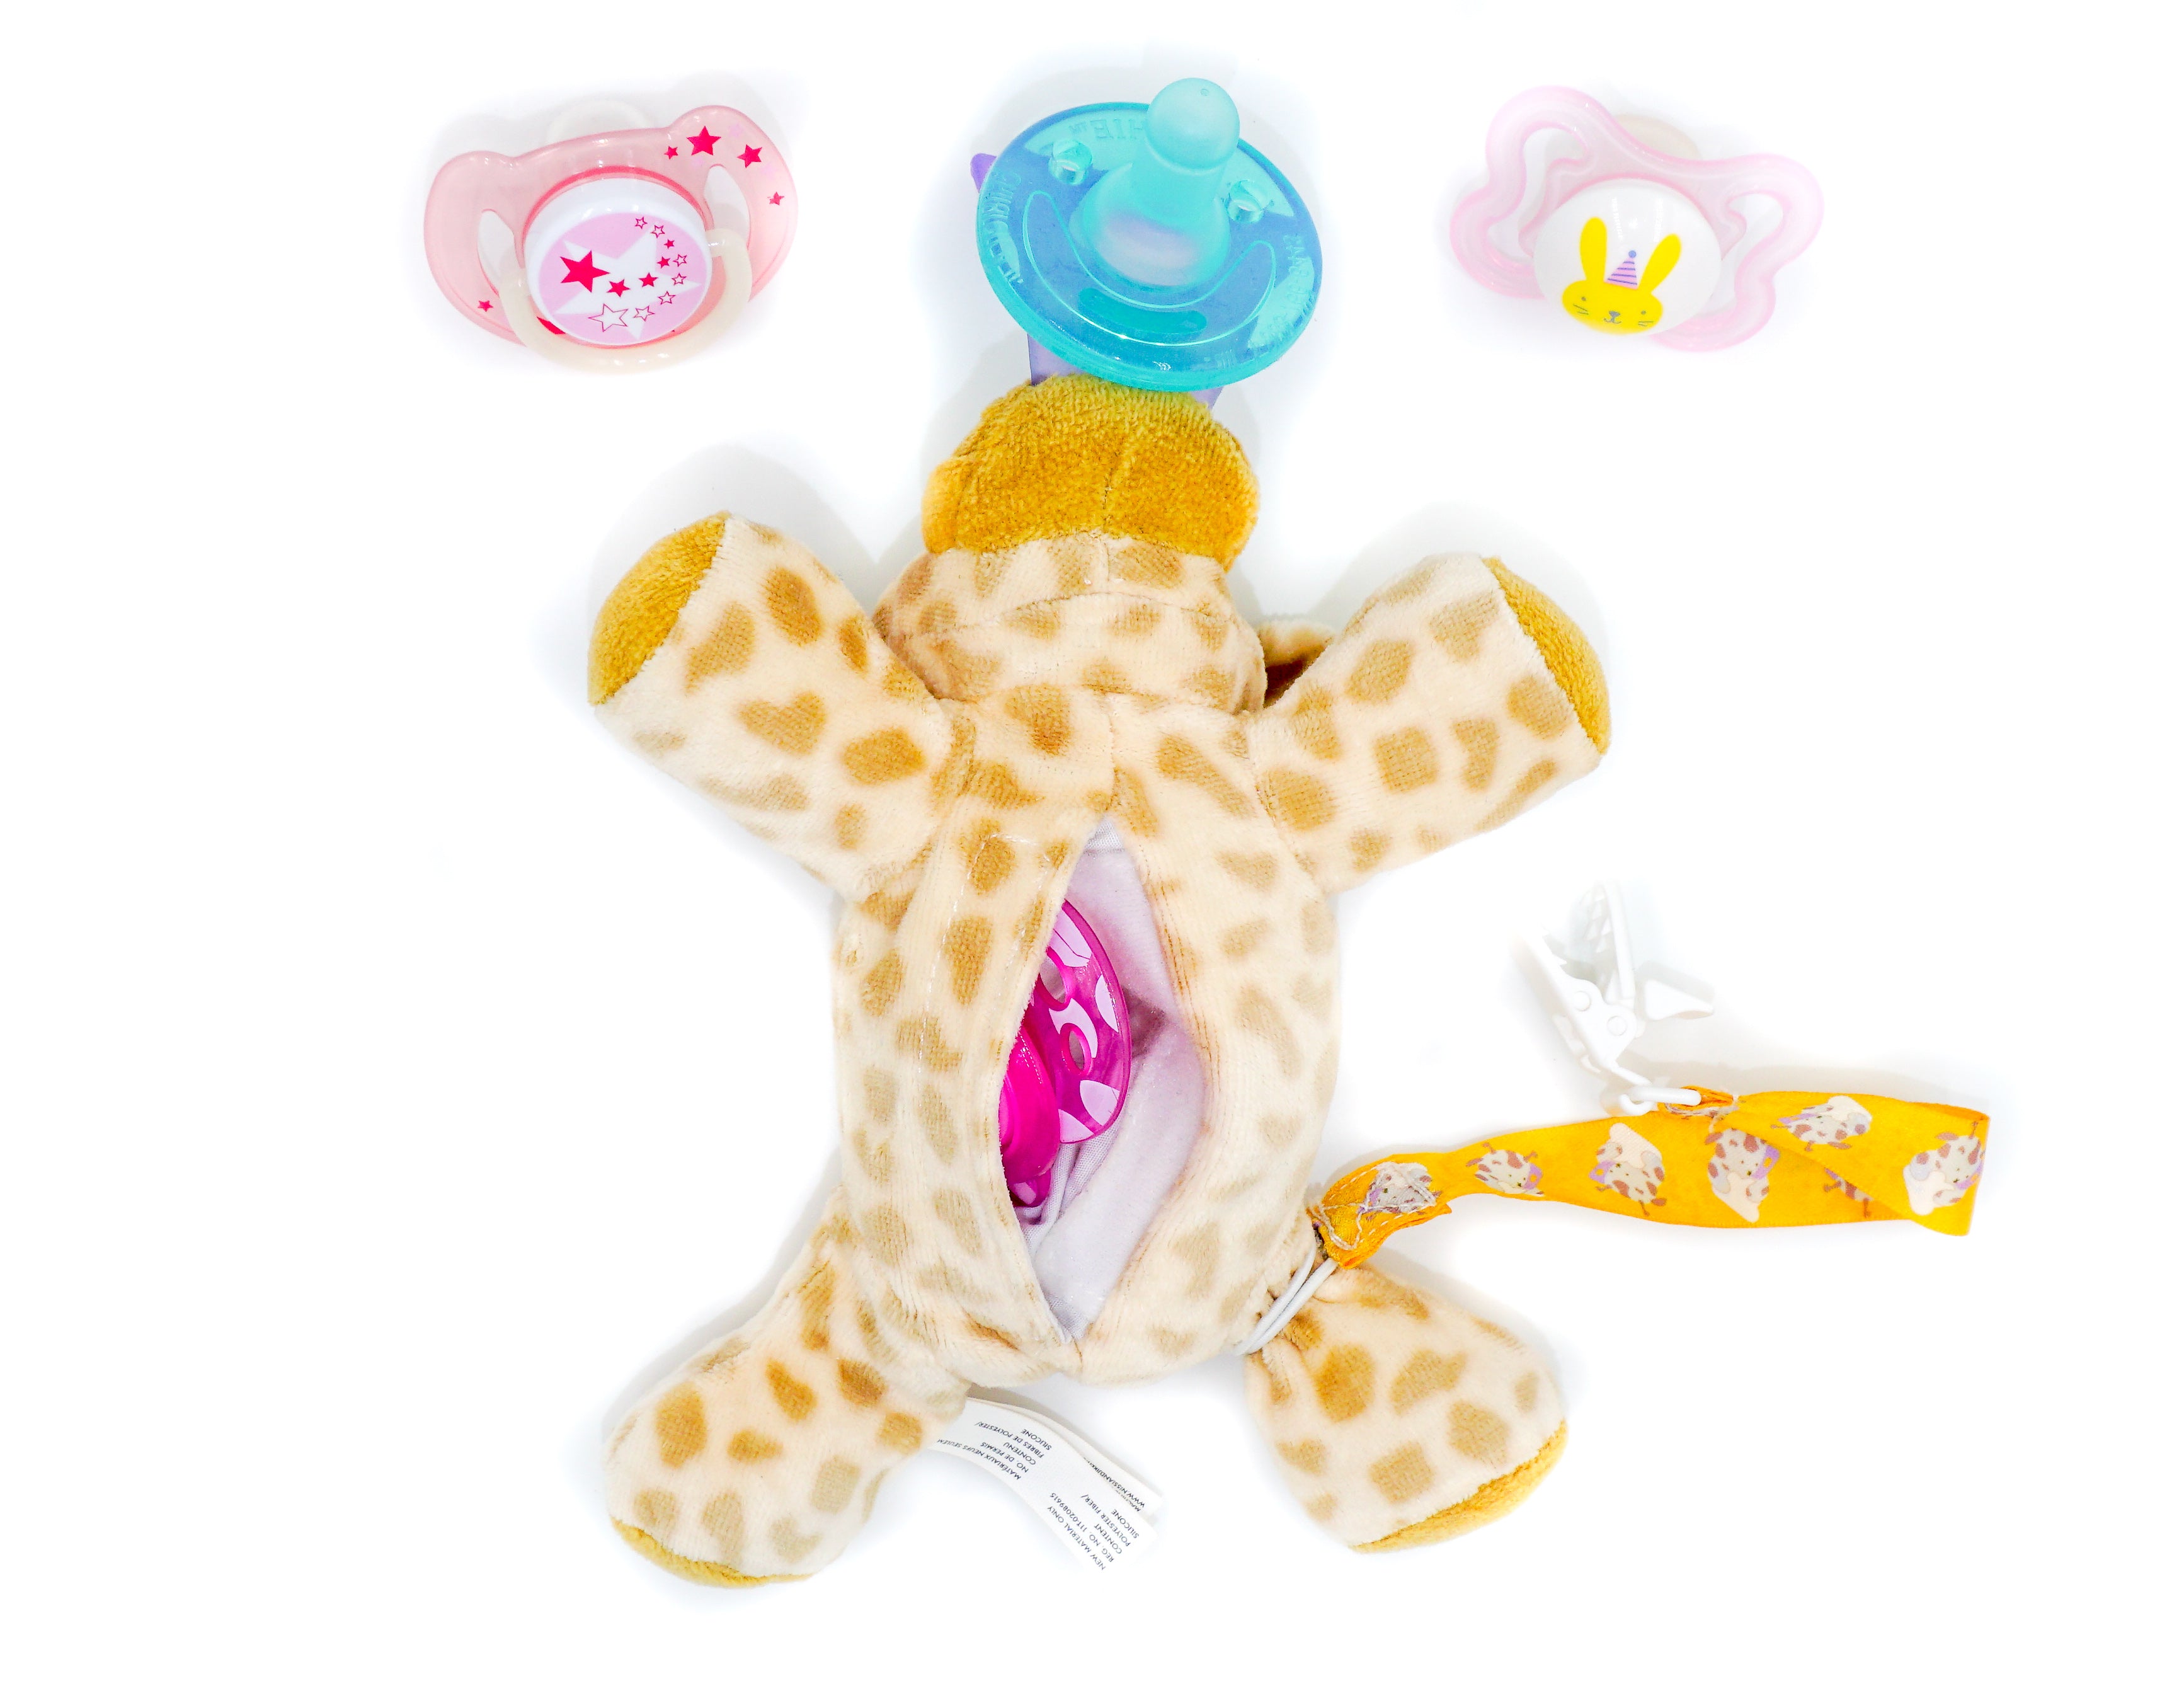 5 in 1 Organic Teething Toy and Detachable Pacifier Holder, Giraffe - nissi-jireh